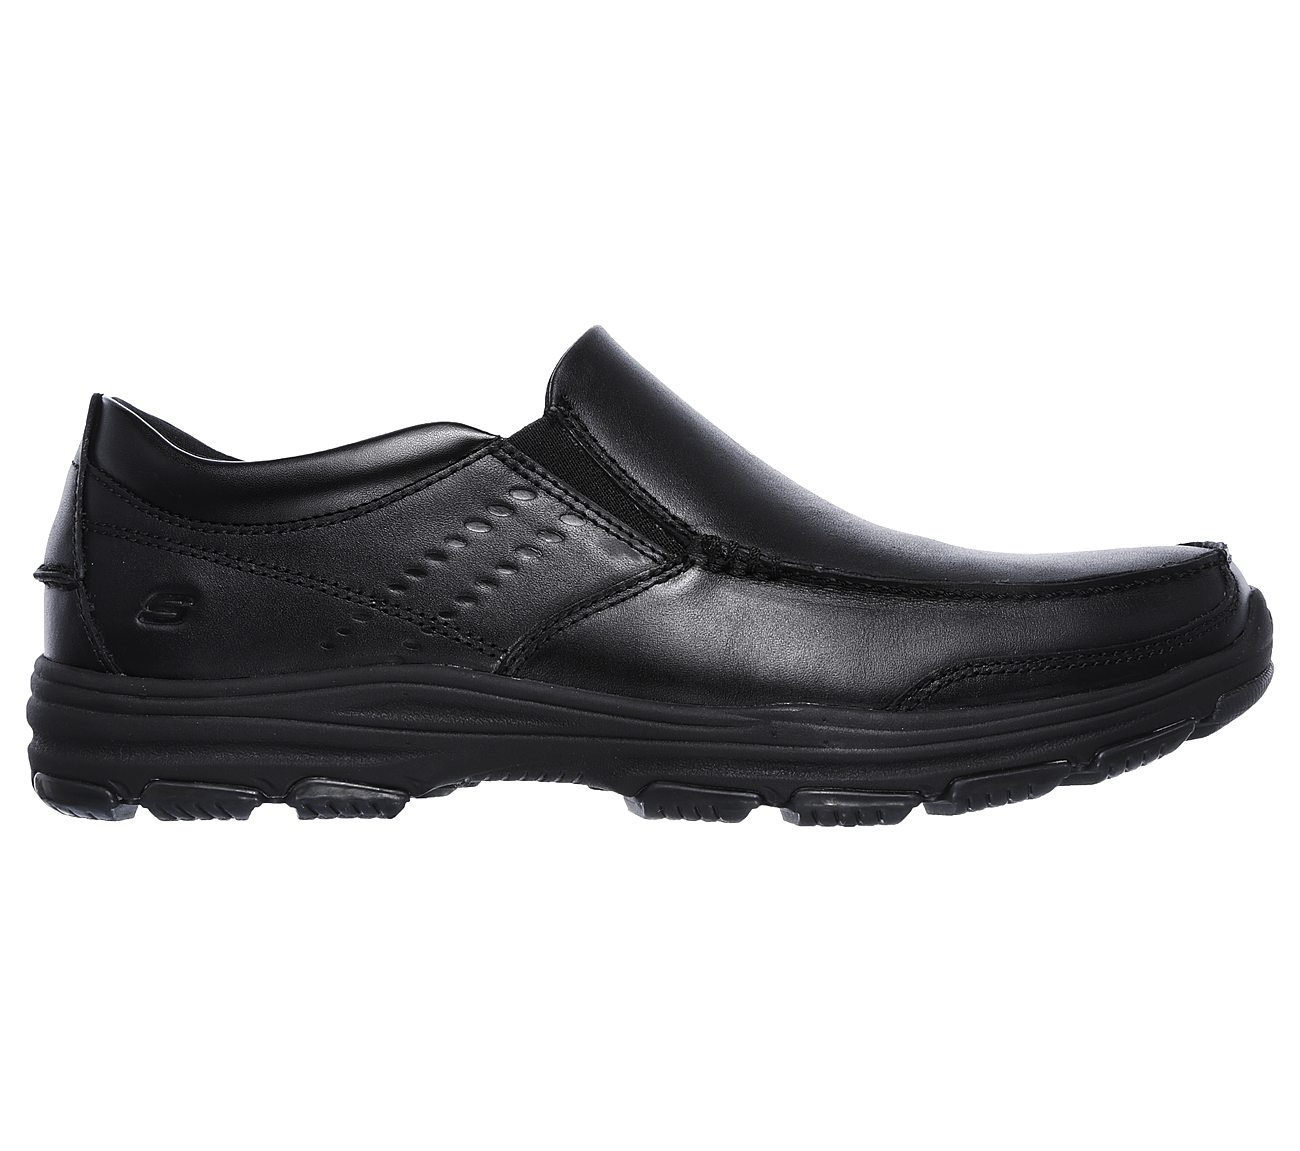 Buy SKECHERS Garton - Messon USA Casuals Shoes